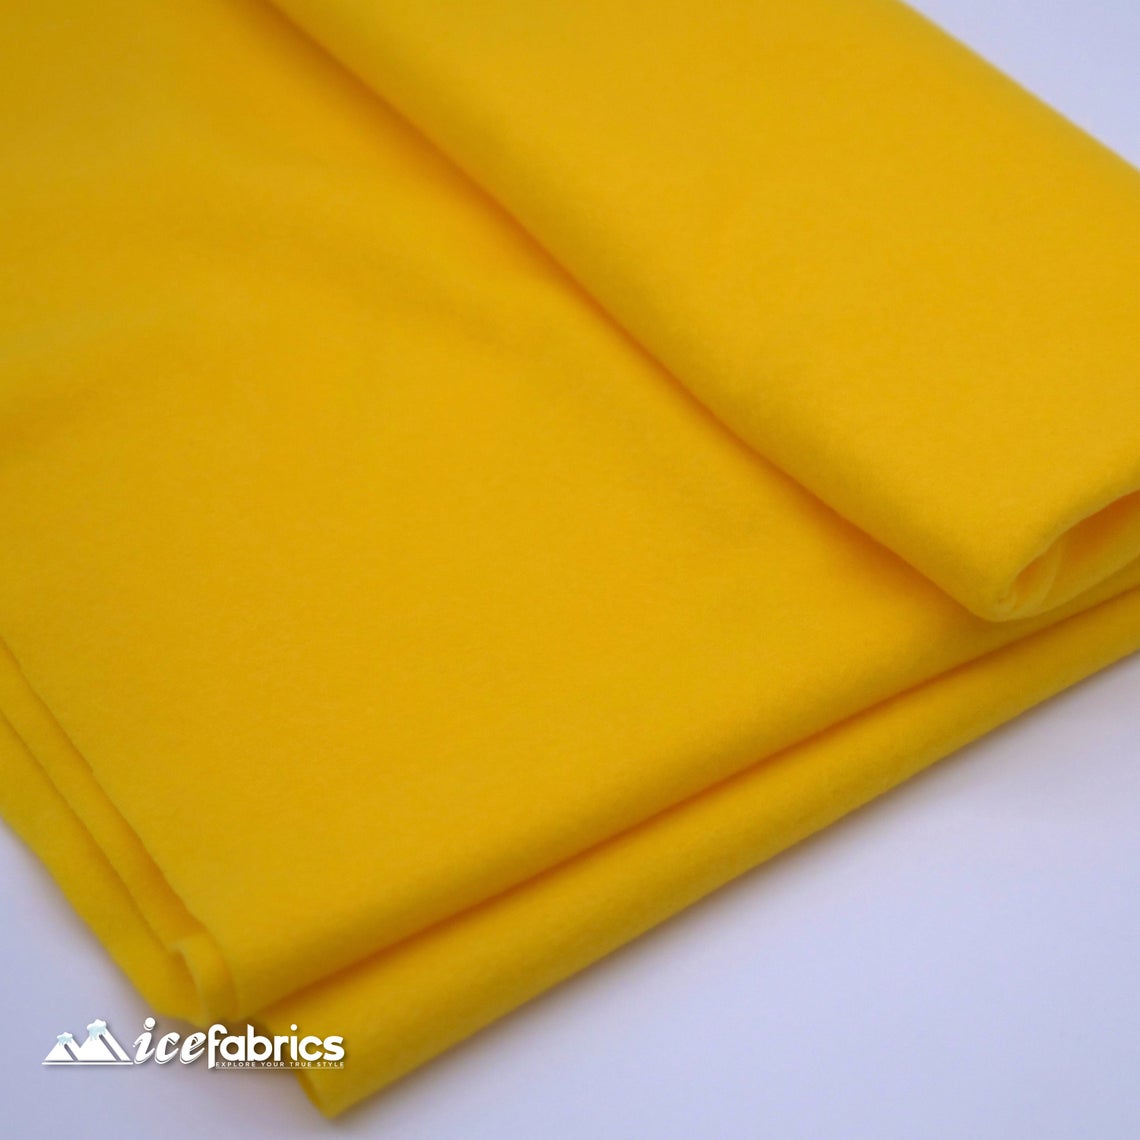 72" Wide 1.6 mm Thick Acrylic Mango Yellow Felt Fabric By The YardICE FABRICSICE FABRICSPer Yard1.6mm Thick72" Wide 1.6 mm Thick Acrylic Mango Yellow Felt Fabric By The Yard ICE FABRICS